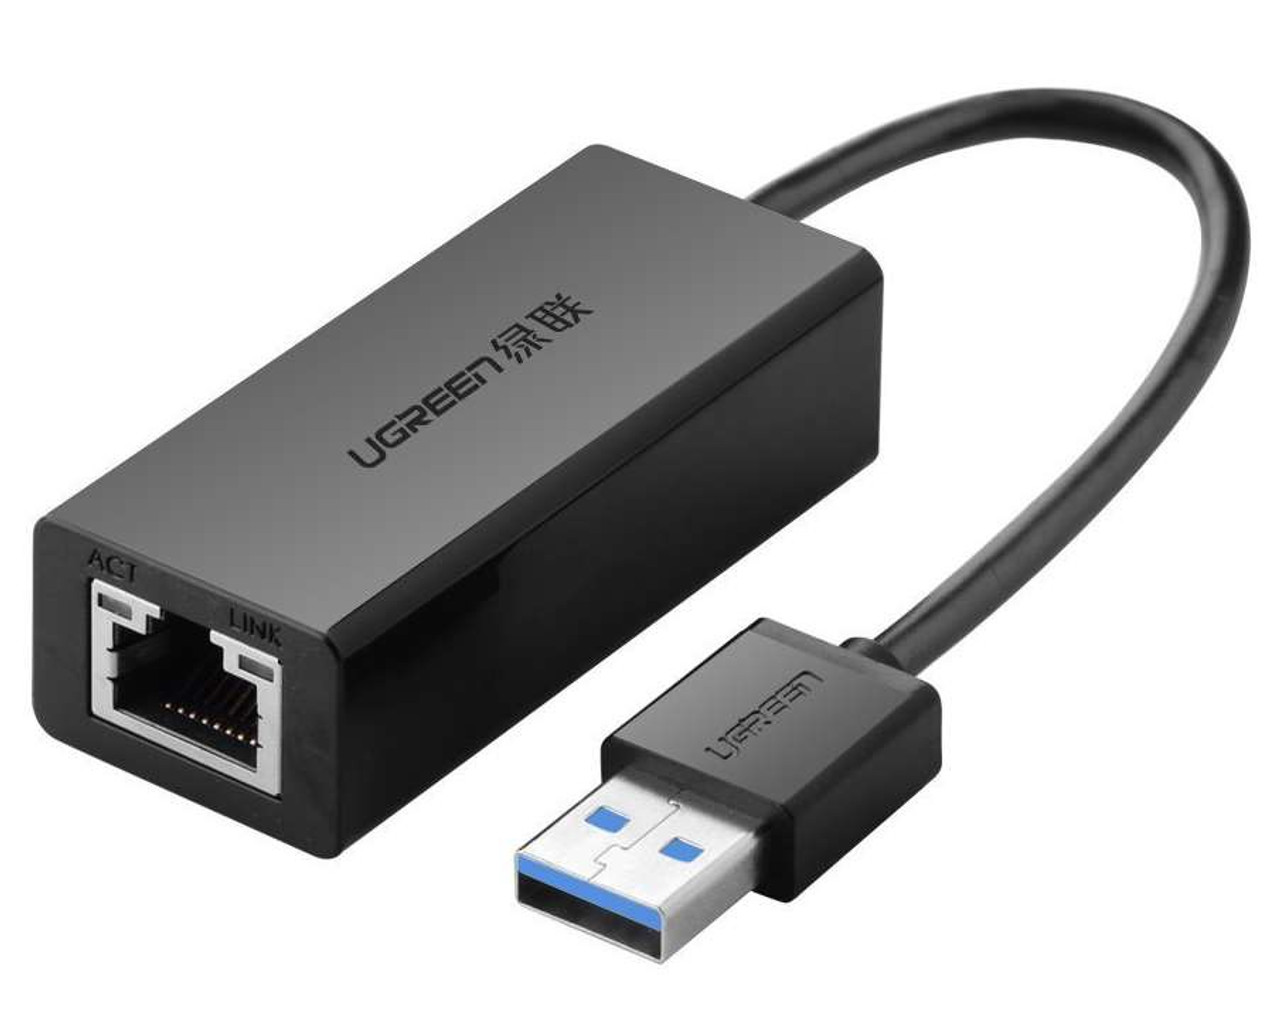 Achetez UGREEN USB C Ethernet USB-C à RJ45 Gigabit Lan Adapter